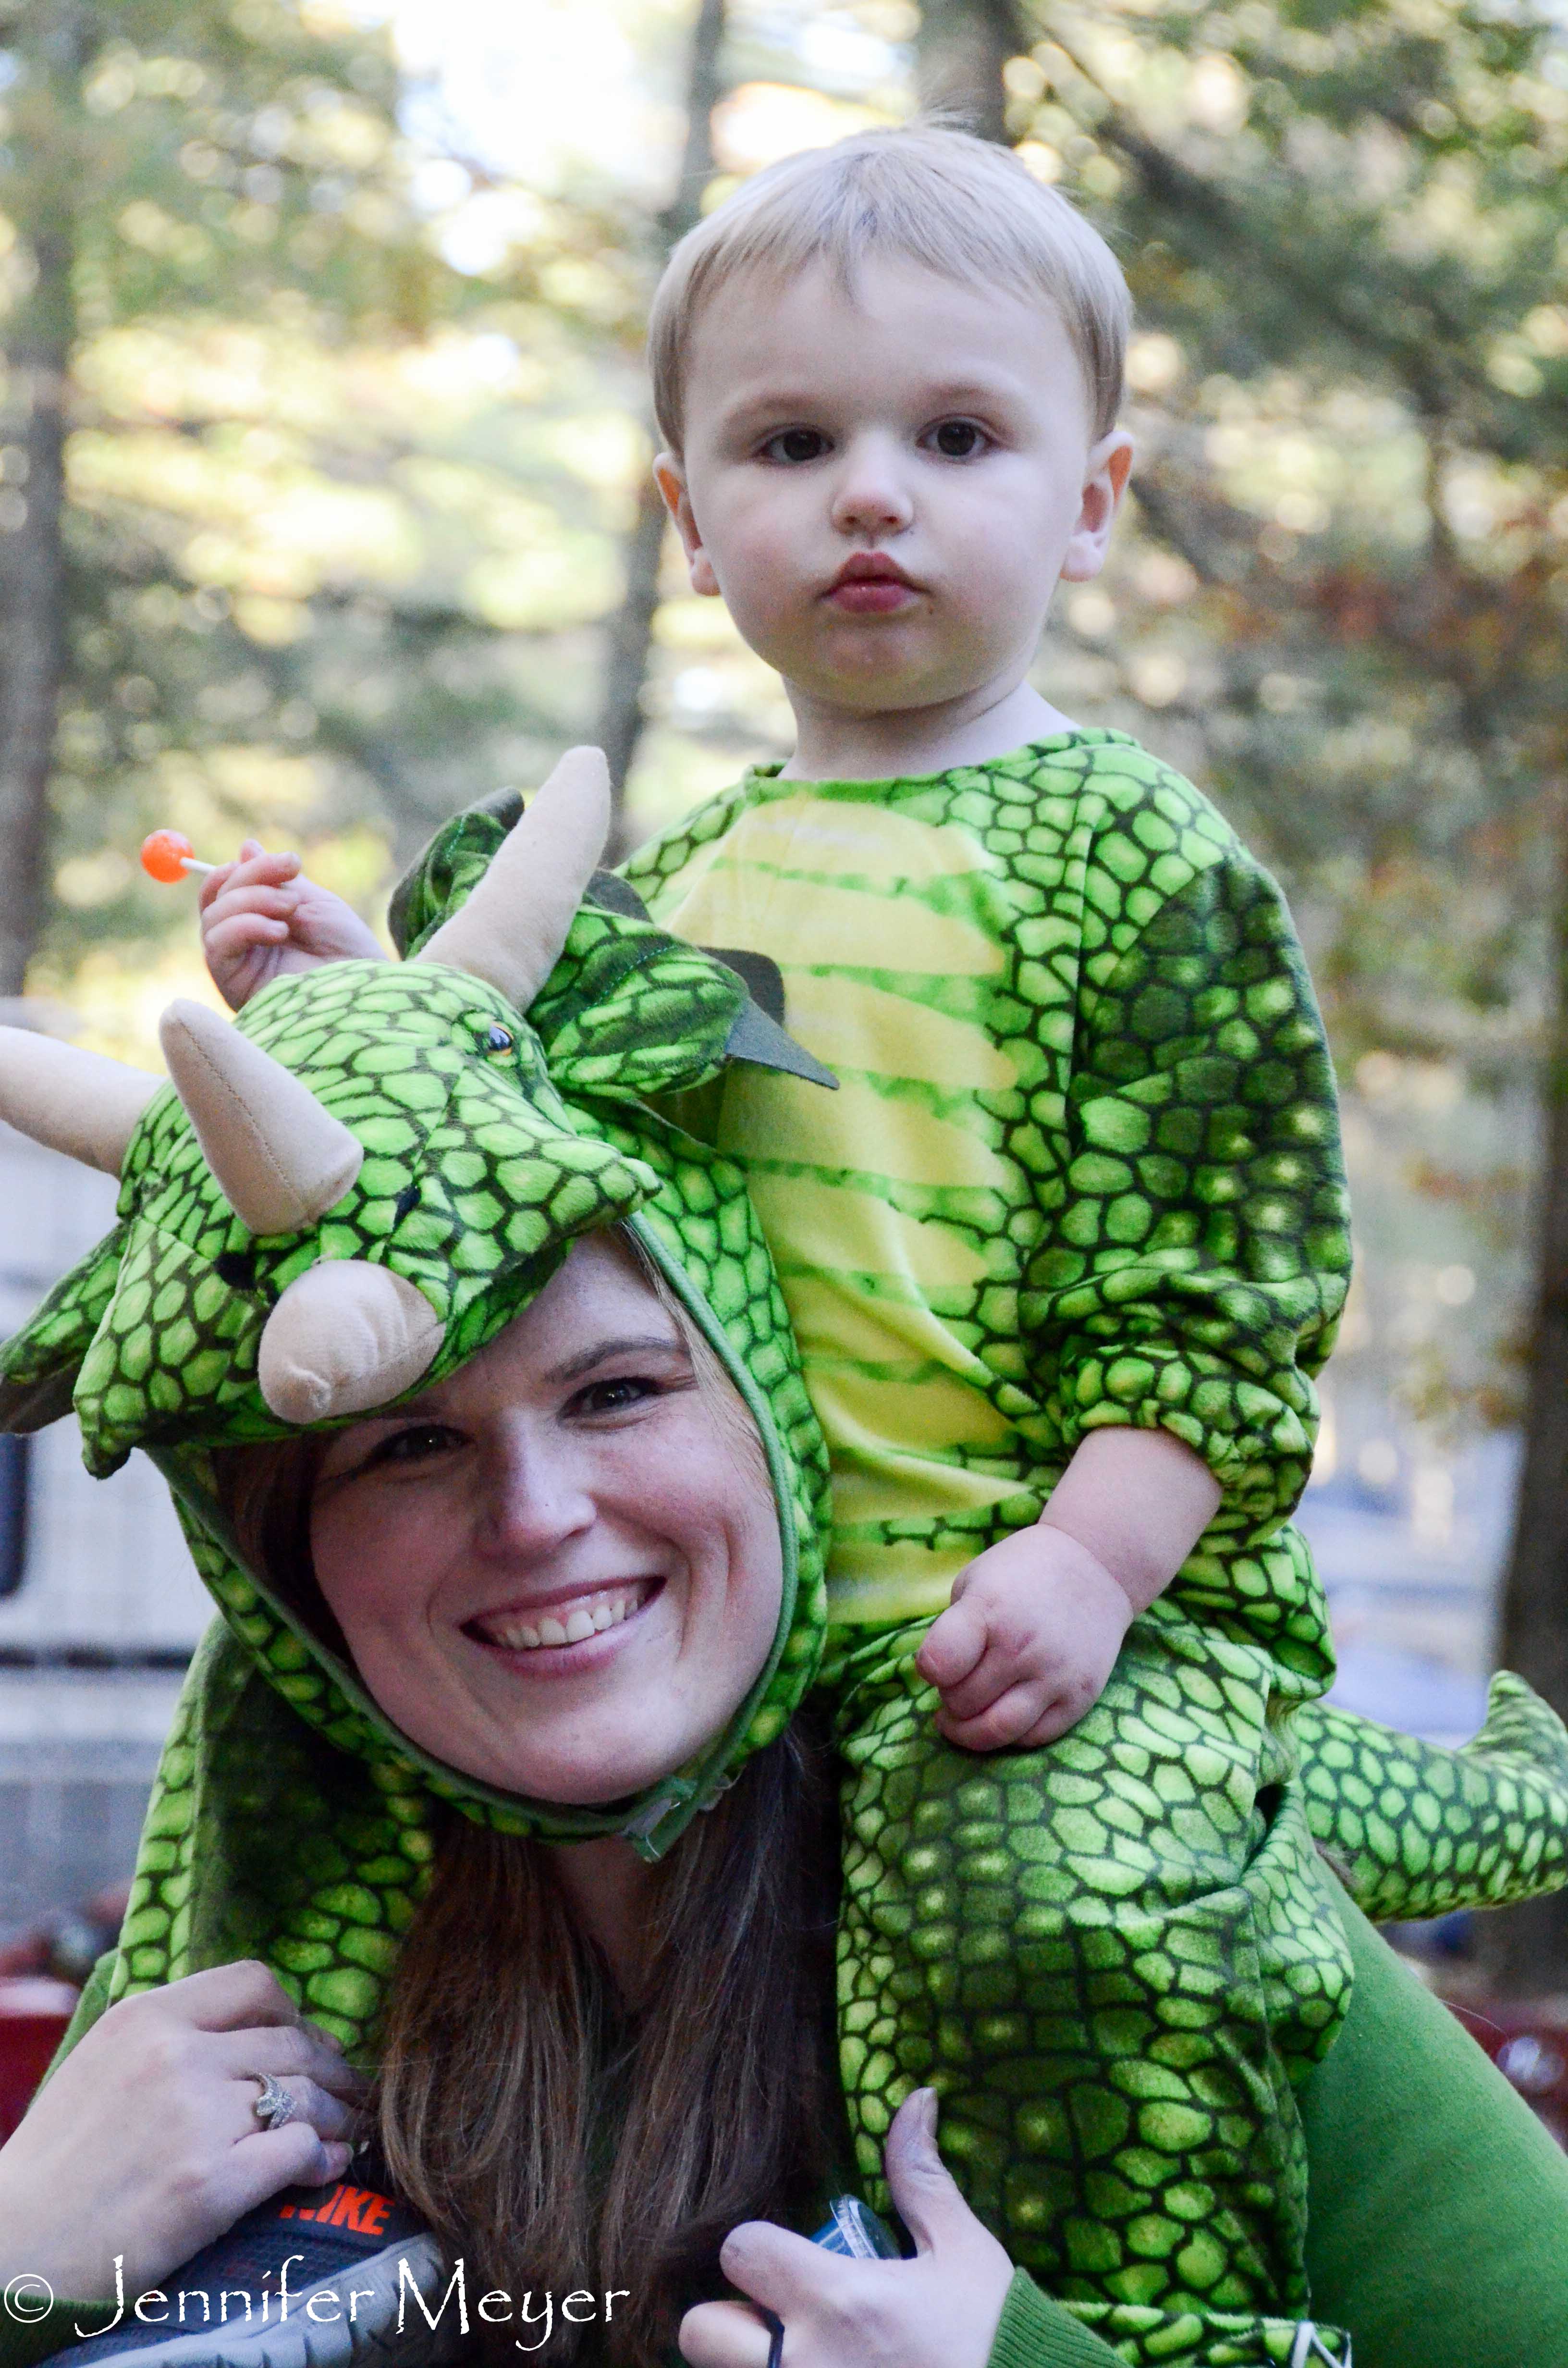 Mom and kid share a dragon costume.